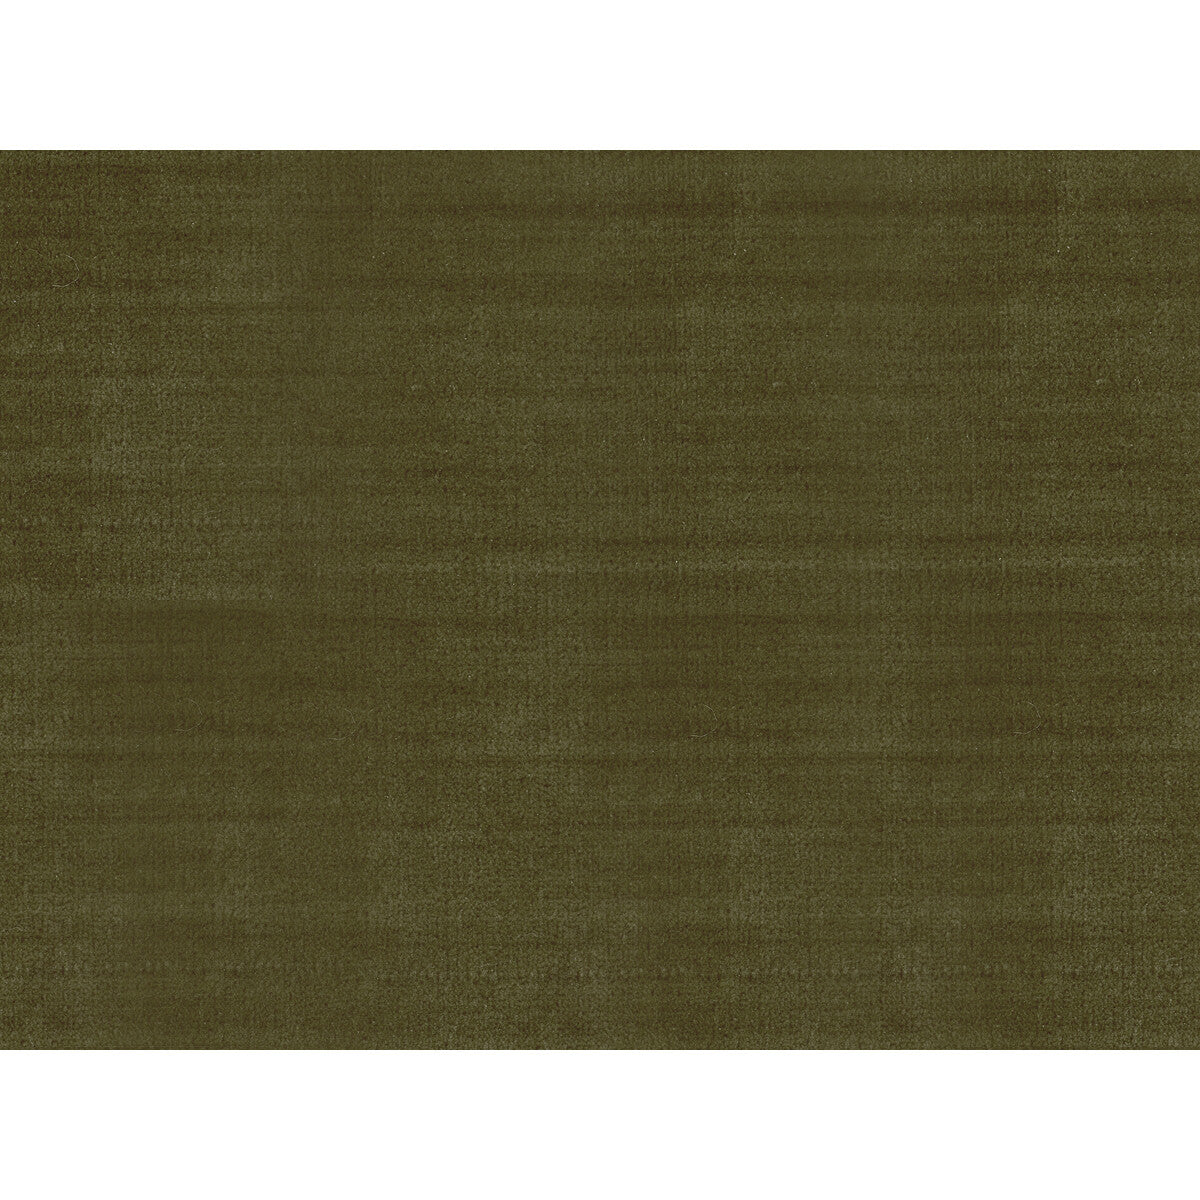 St fabric in florent silk velvet evergreen color - pattern BR-89780.481.0 - by Brunschwig &amp; Fils